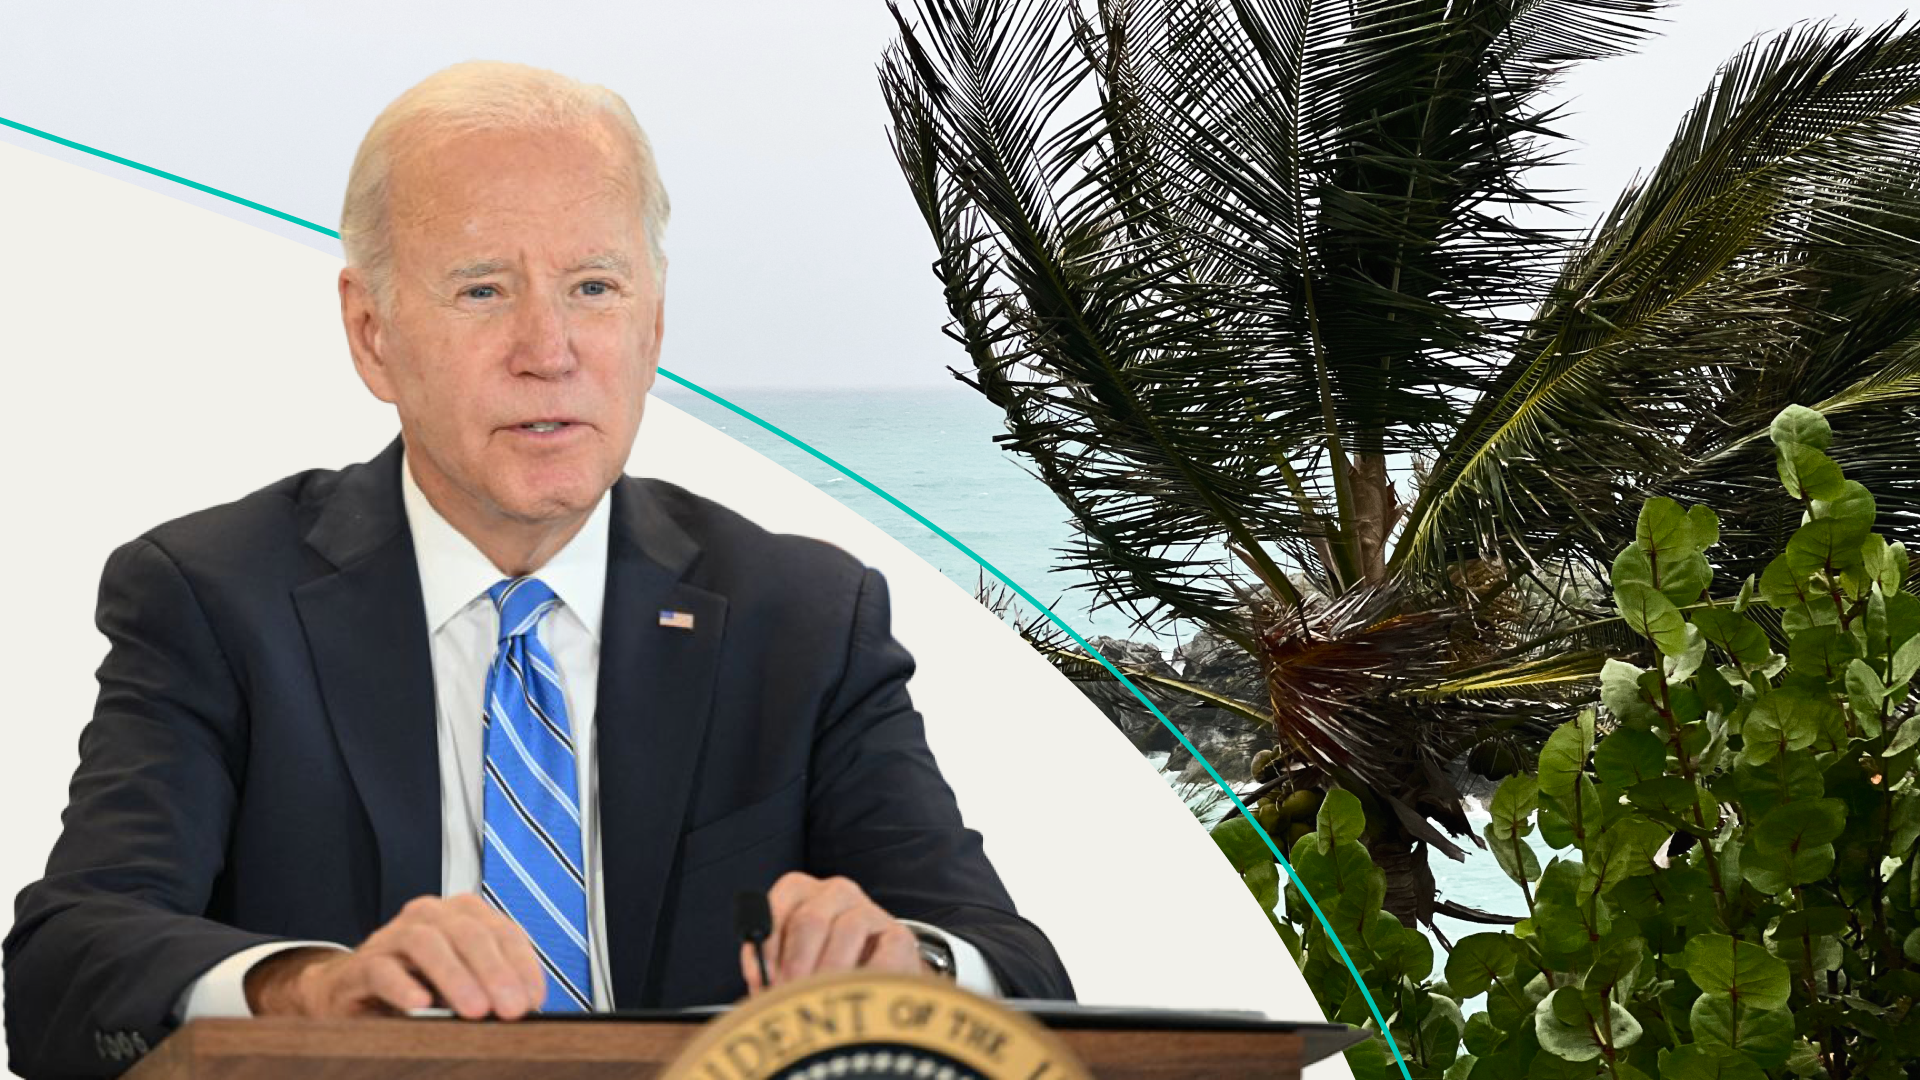 President Joe Biden next to wind-blown trees